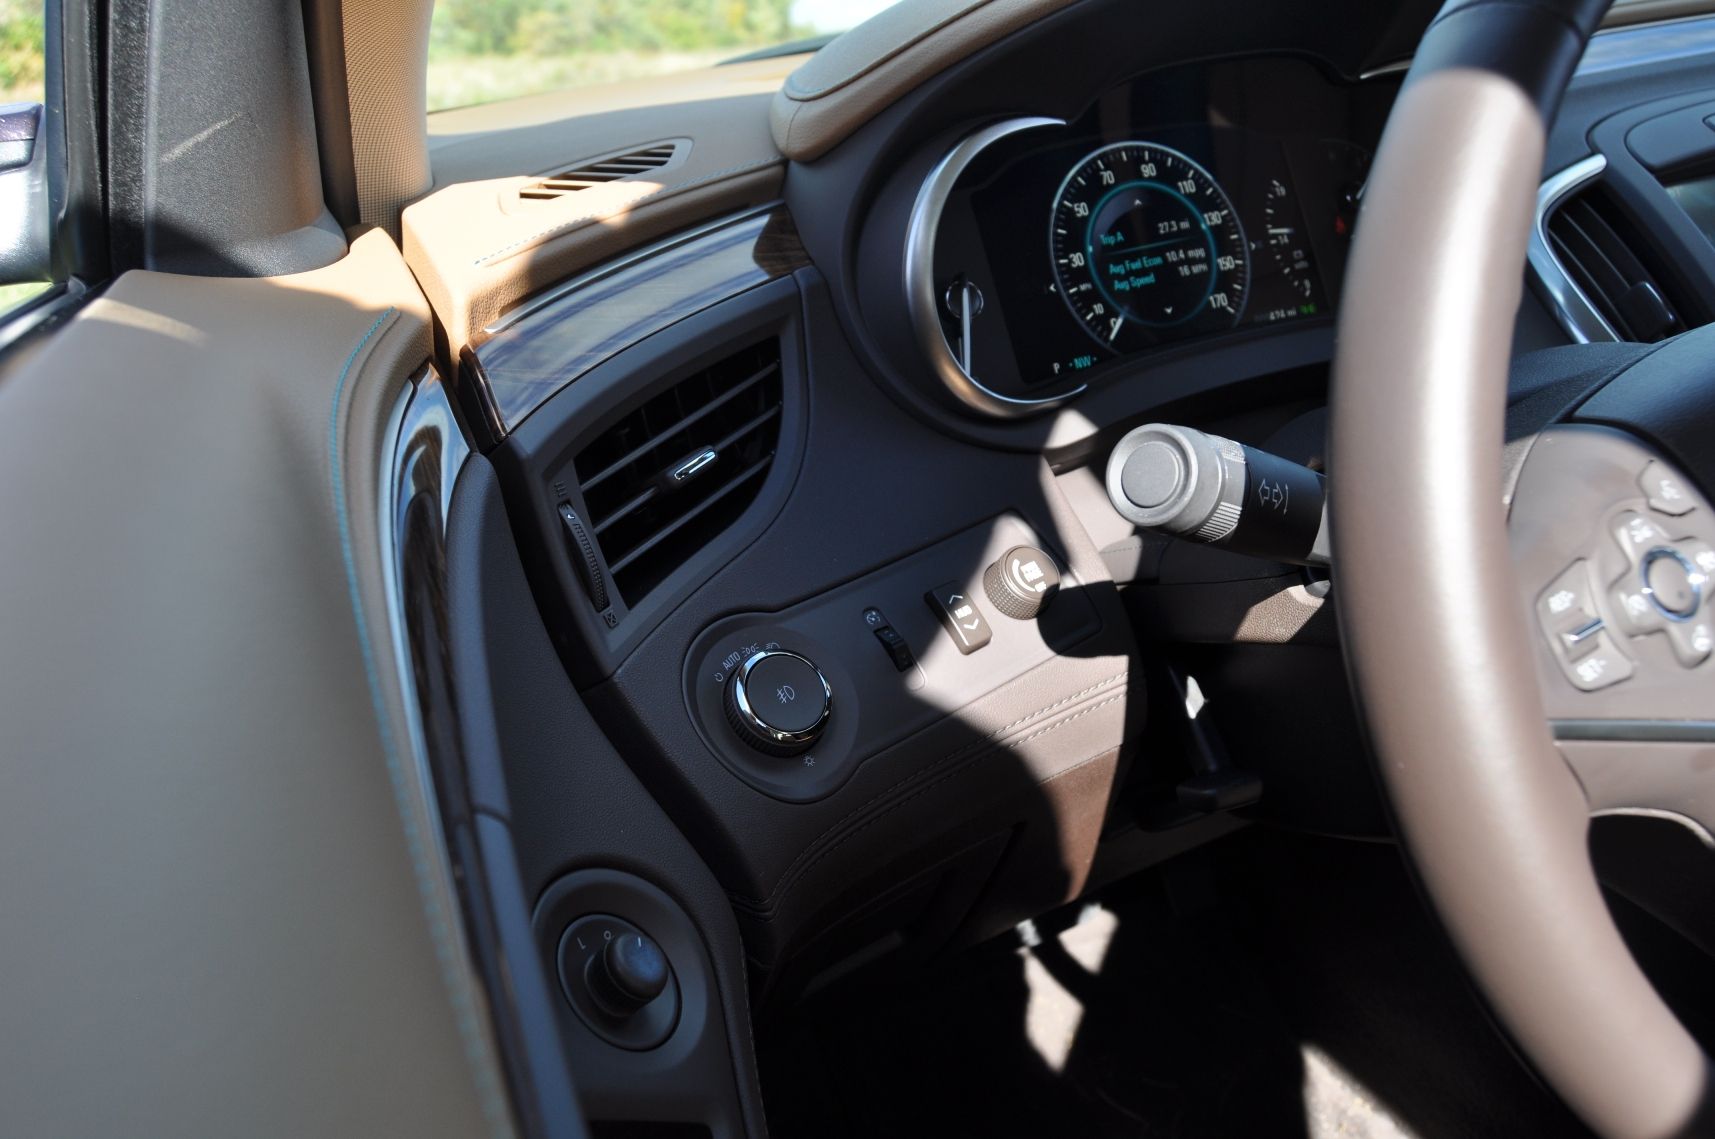 2014 Buick LaCrosse - Driven